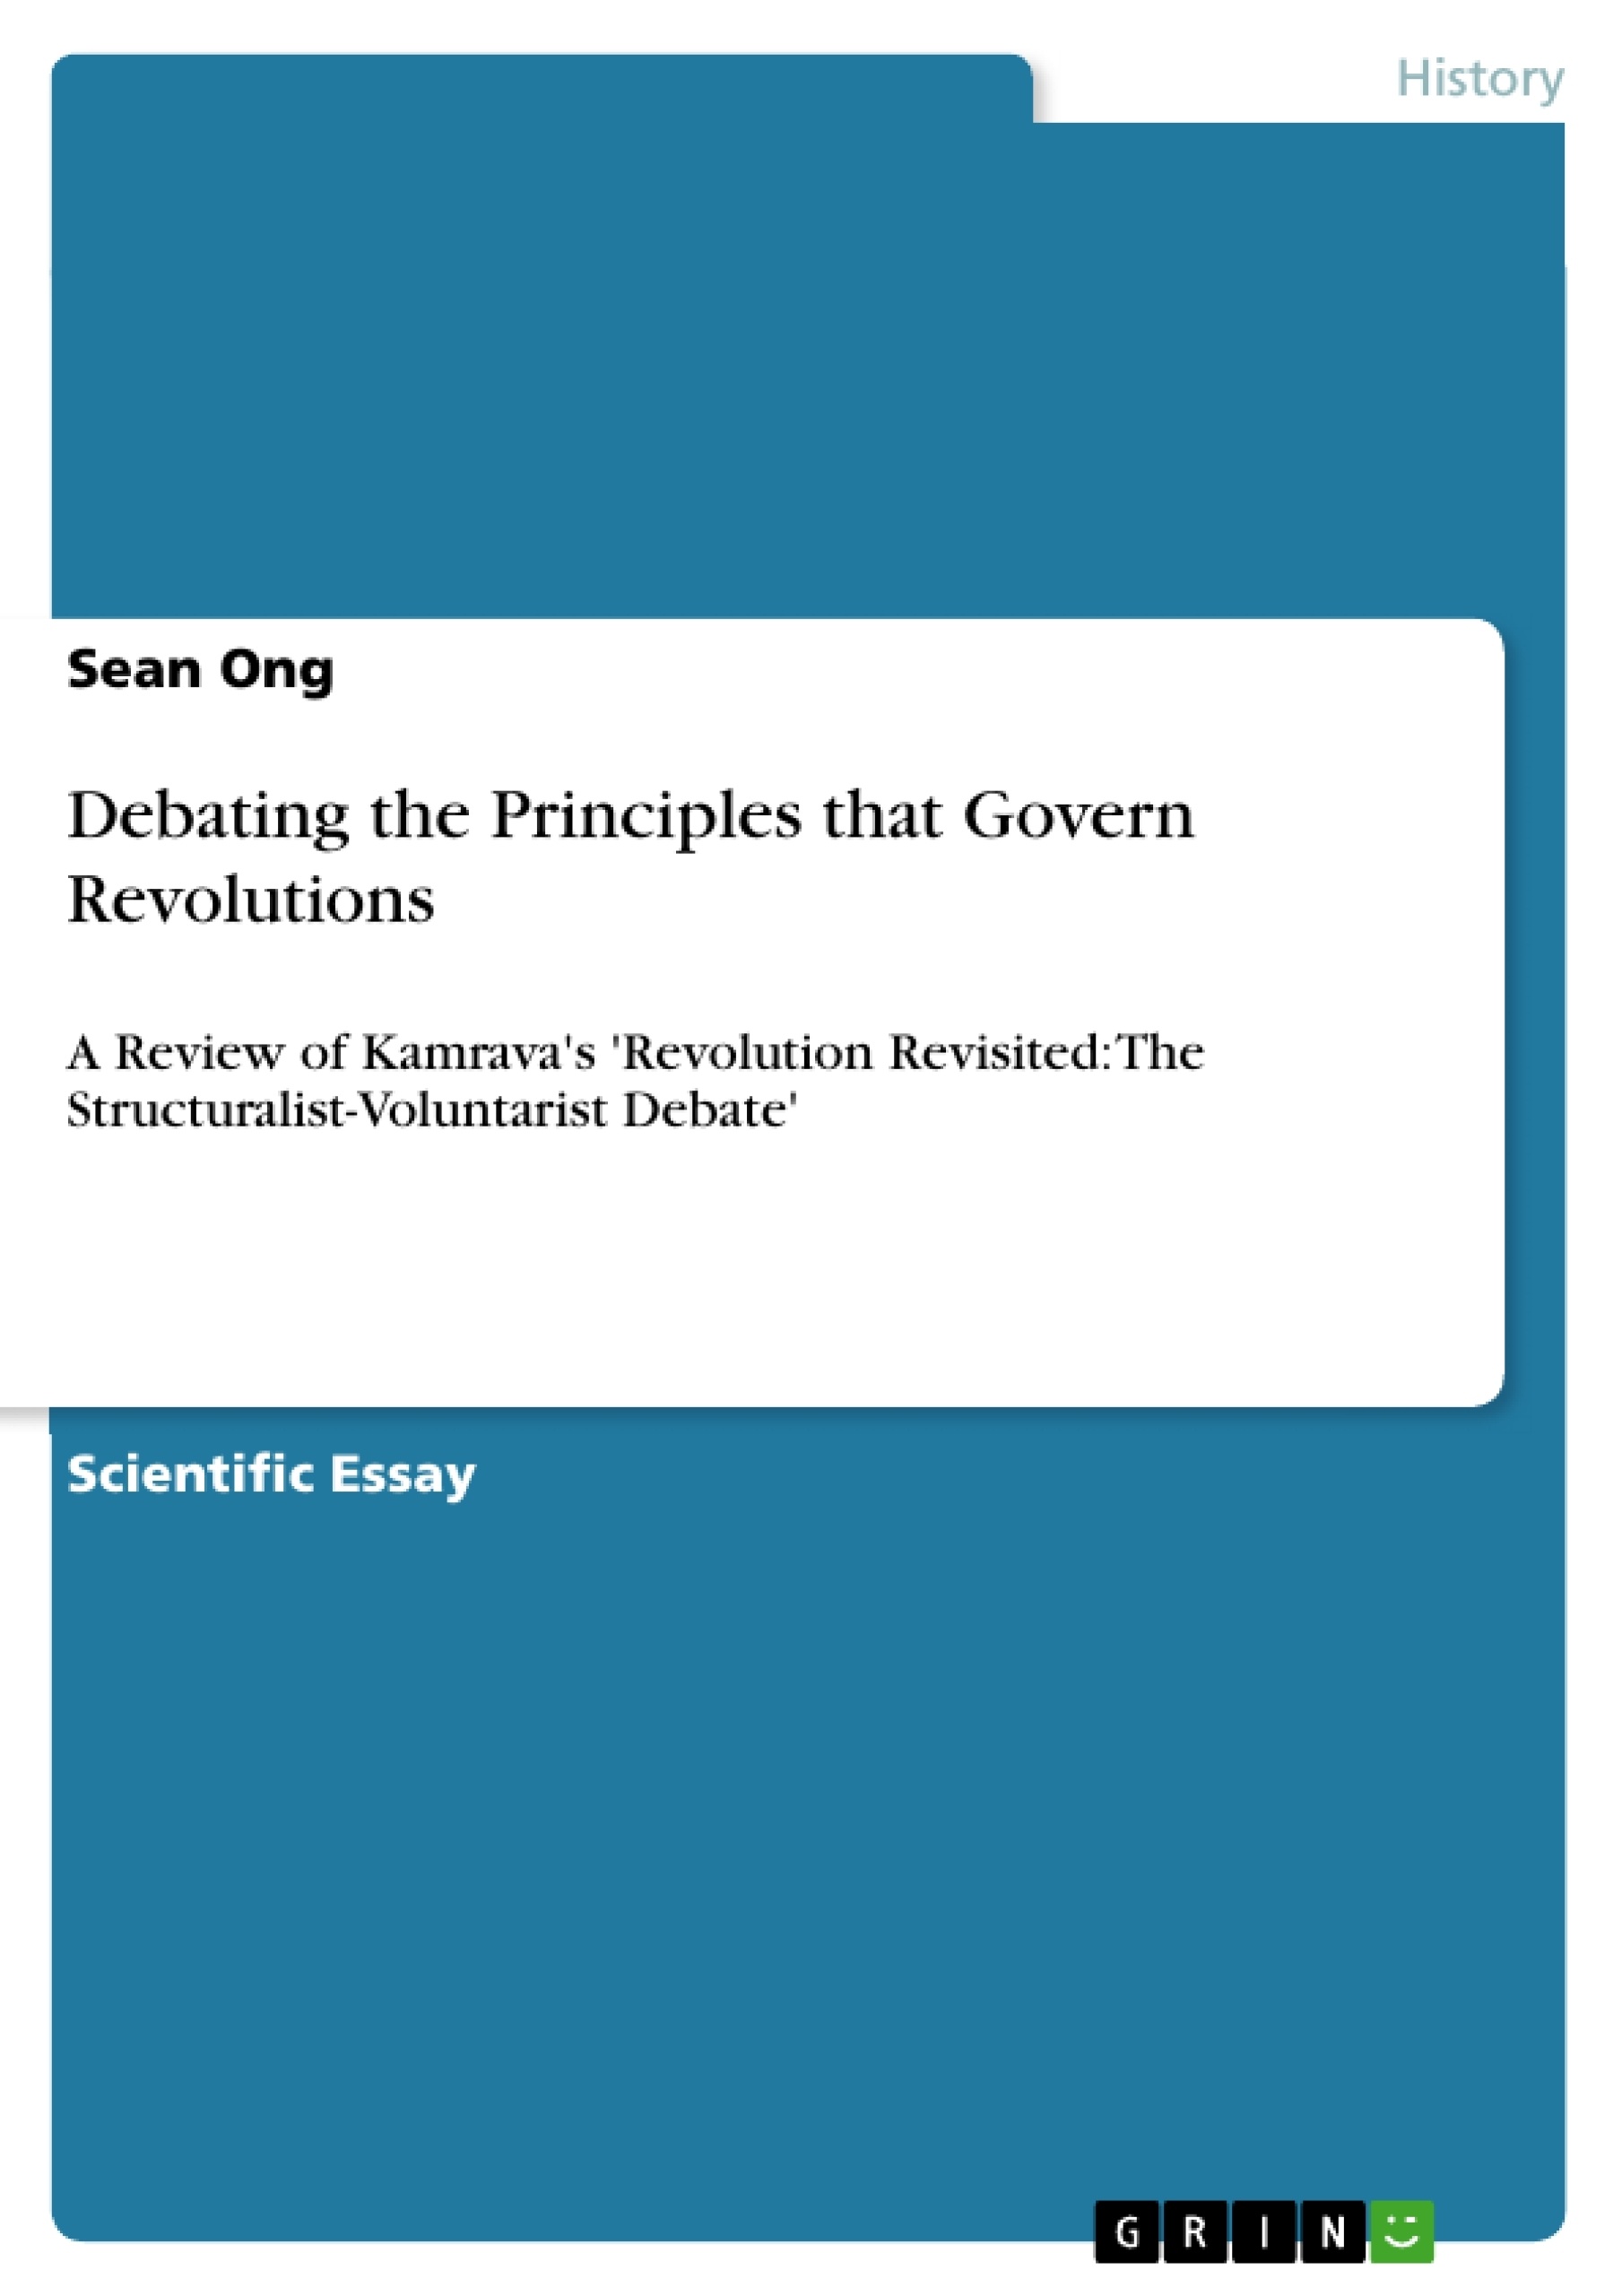 Título: Debating the Principles that Govern Revolutions